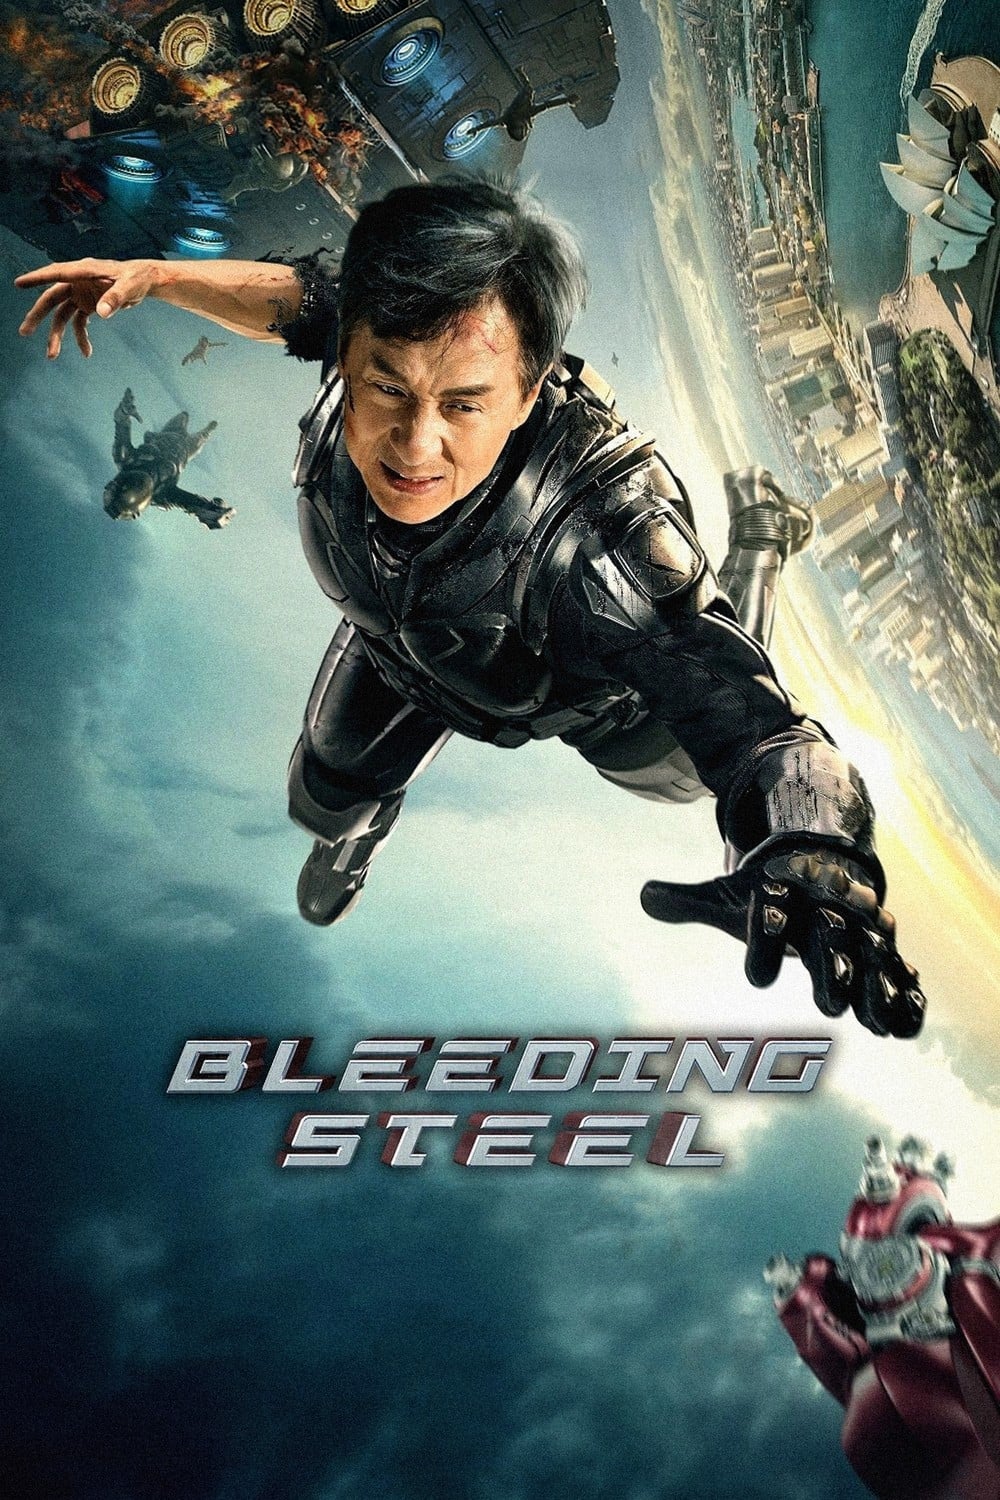 Poster for the movie "Bleeding Steel"